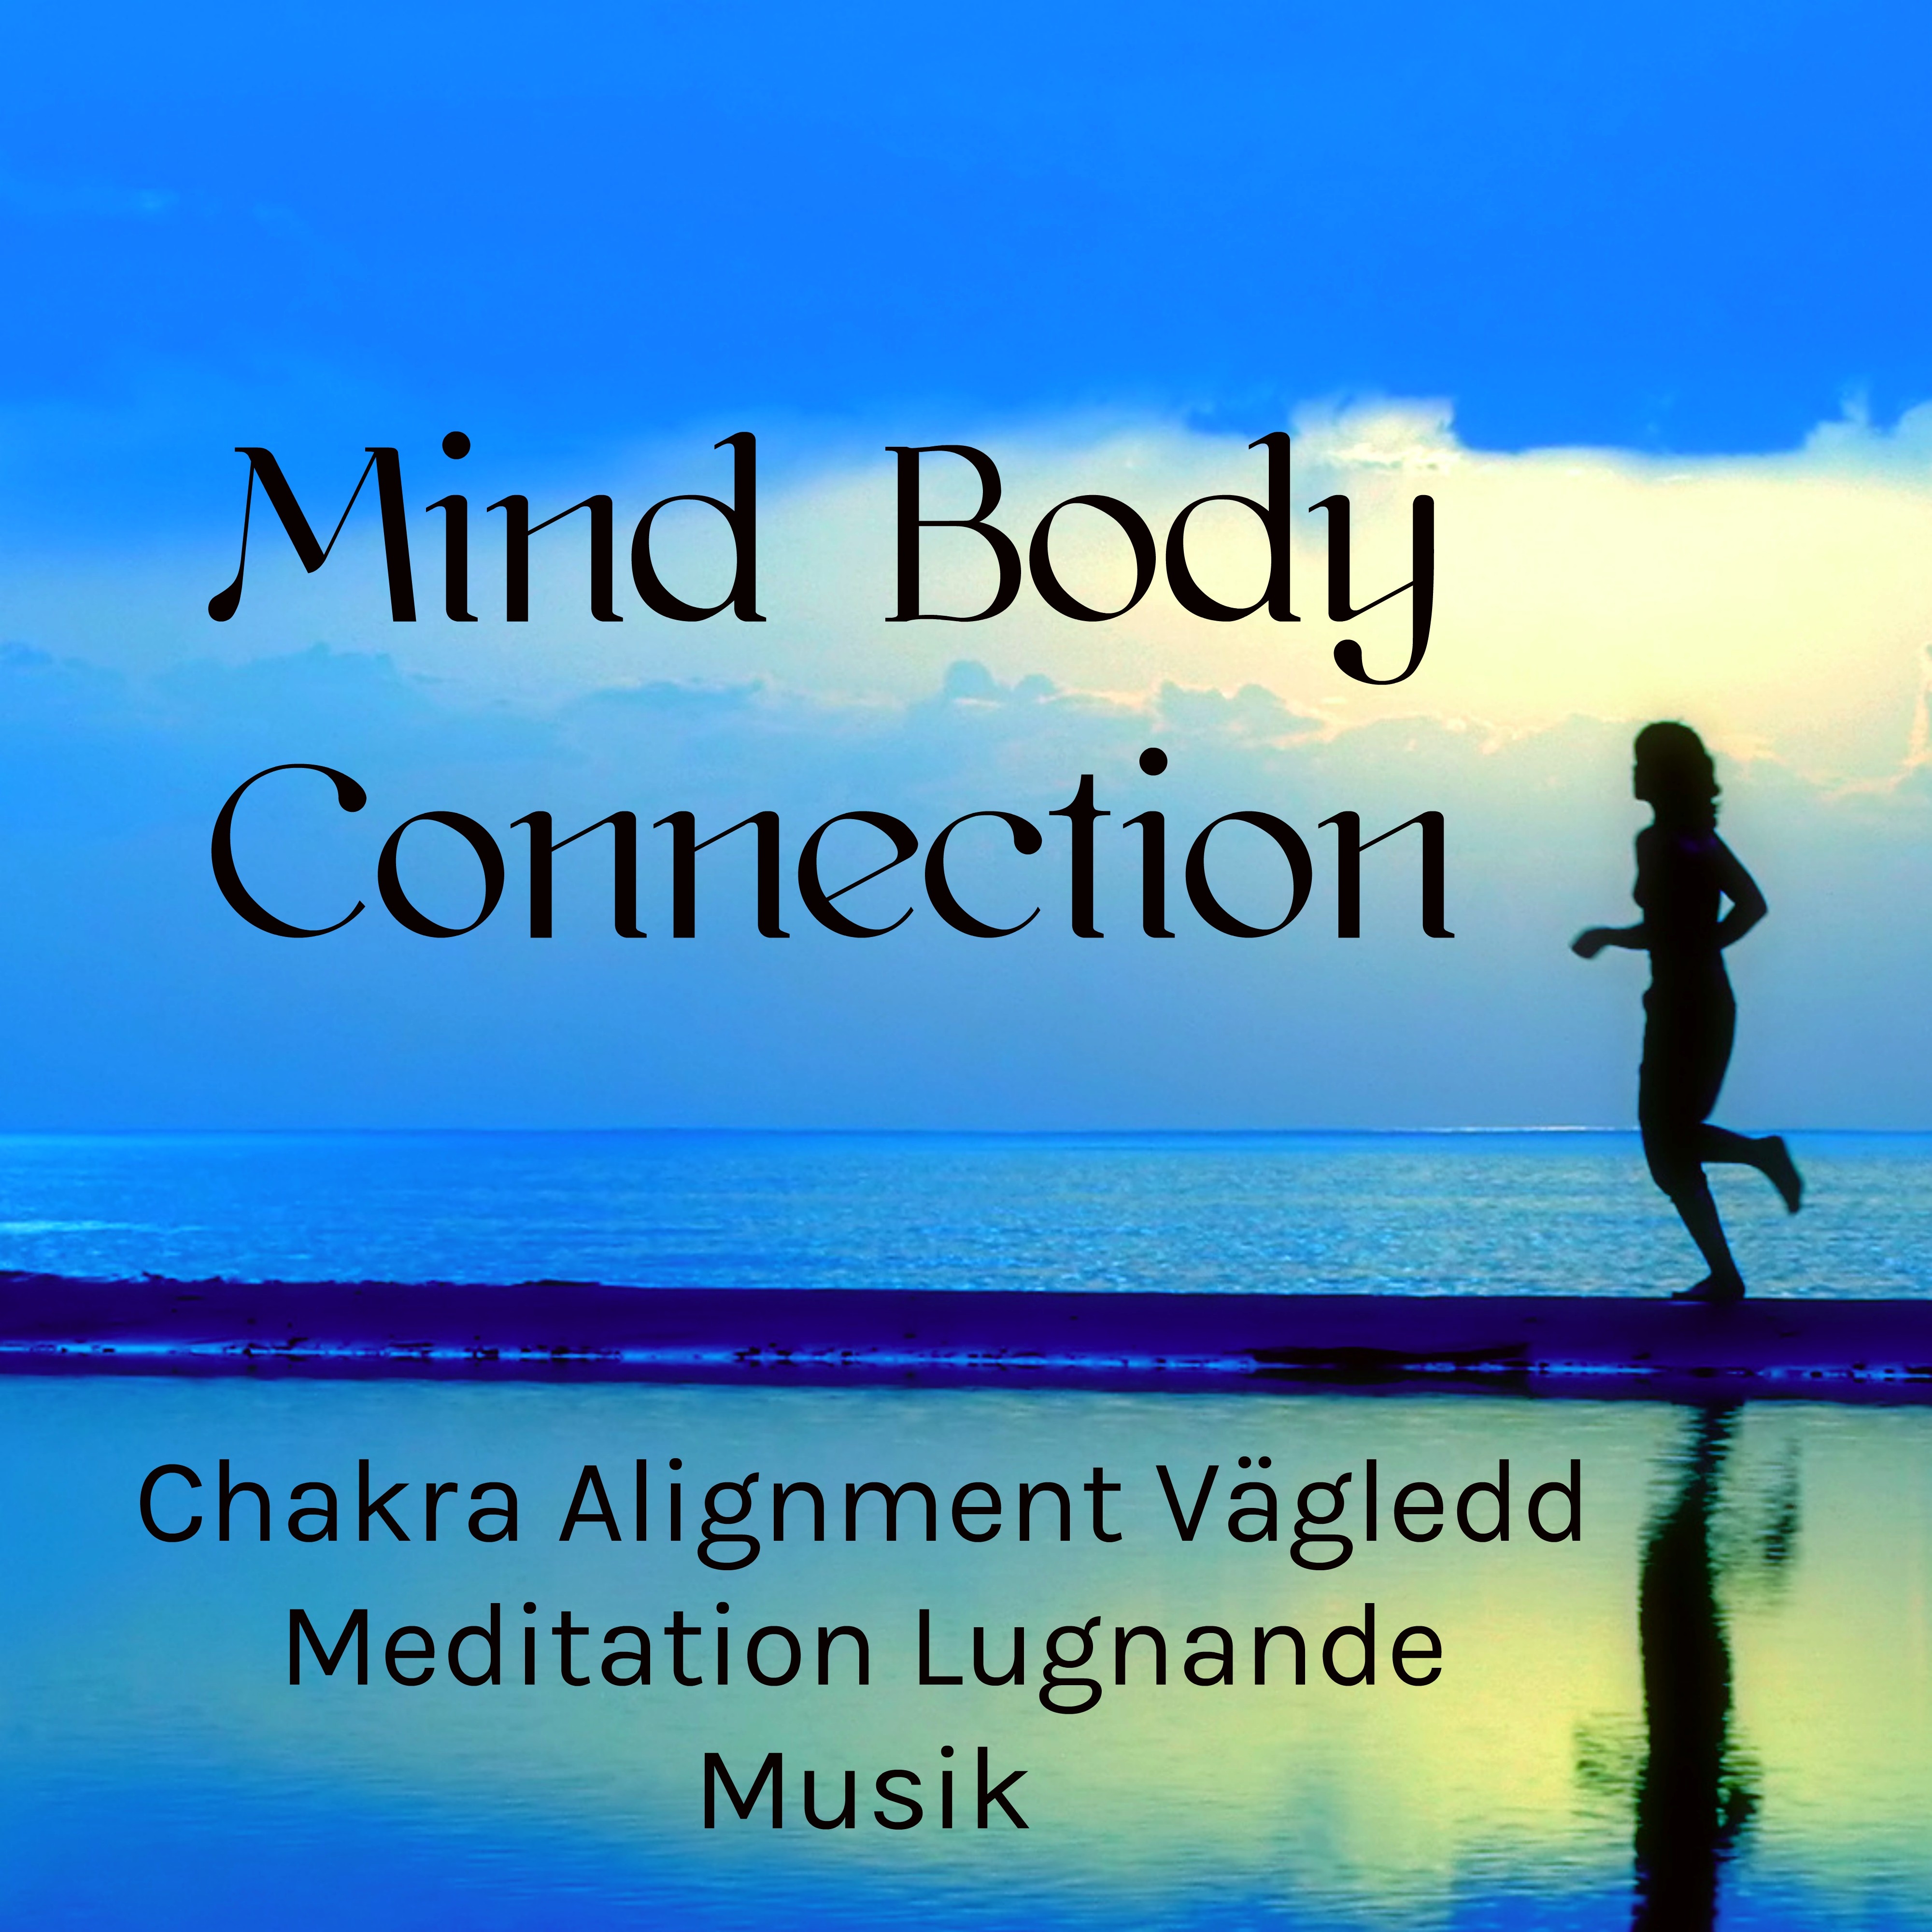 Mind Body Connection  Chakra Alignment V gledd Meditation Lugnande Musik f r S mnl shet Behandling Minska ngest Naturl kemedel